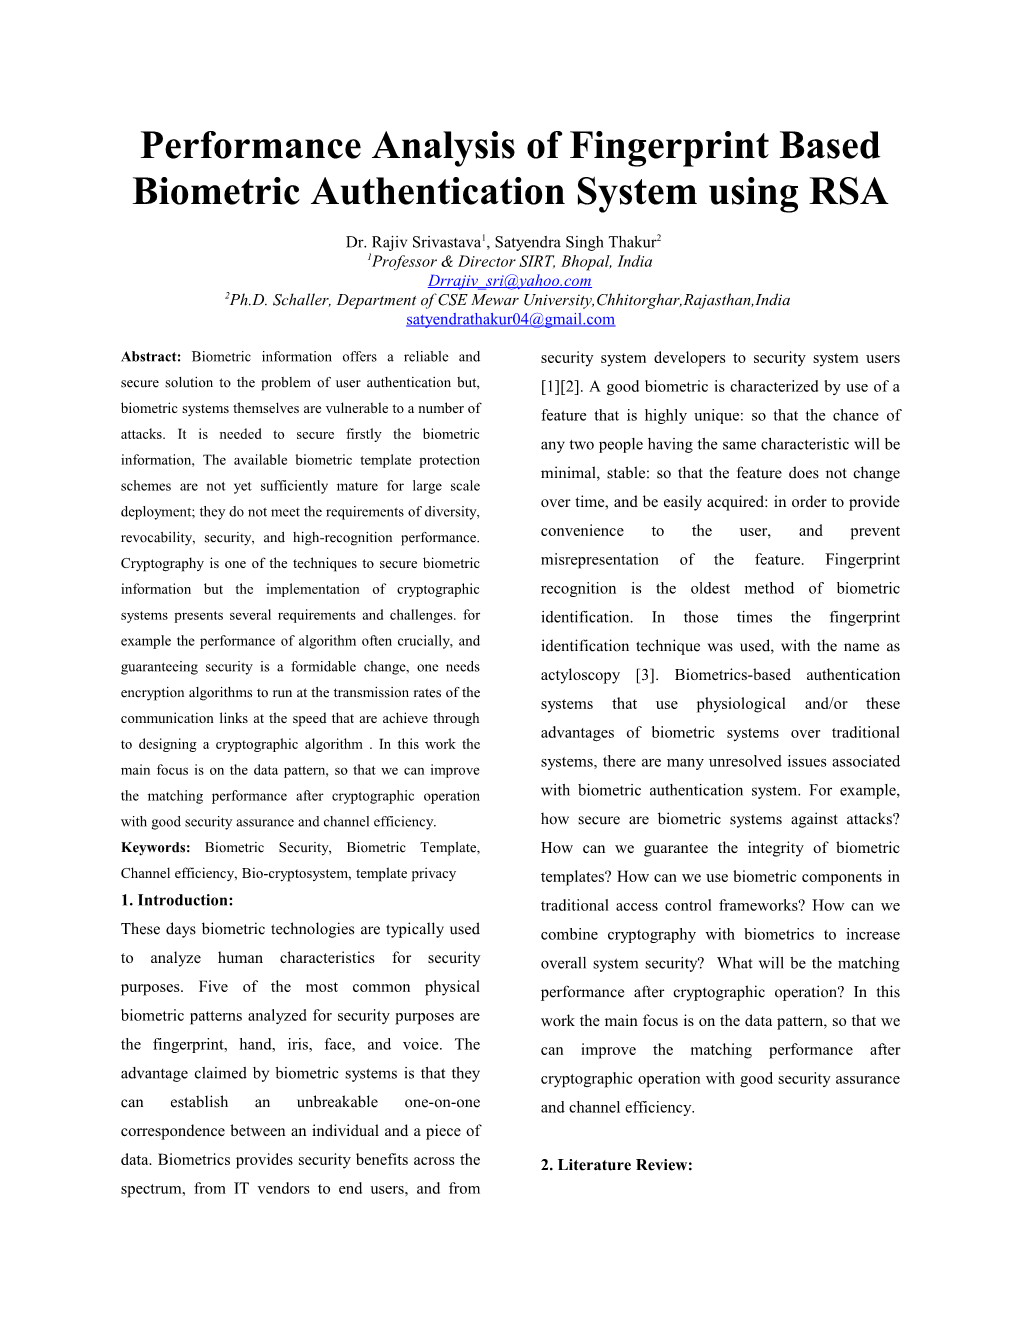 Performance Analysis of Fingerprint Based Biometric Authentication System Using RSA